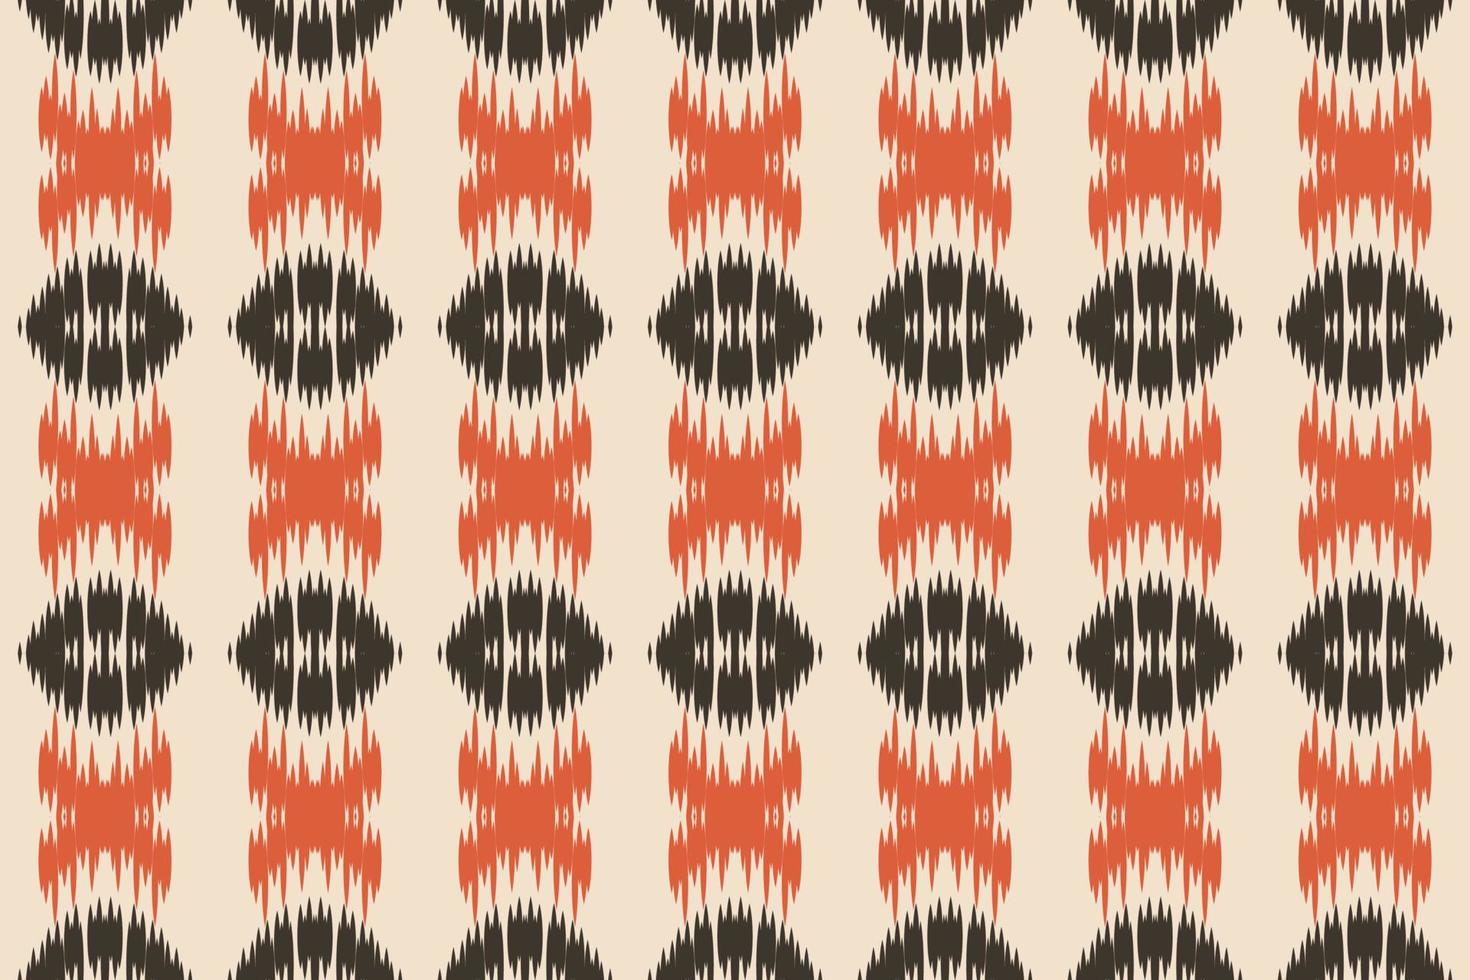 filipino ikat azteca fondo tribal borneo escandinavo batik bohemio textura vector digital diseño para imprimir saree kurti tela cepillo símbolos muestras